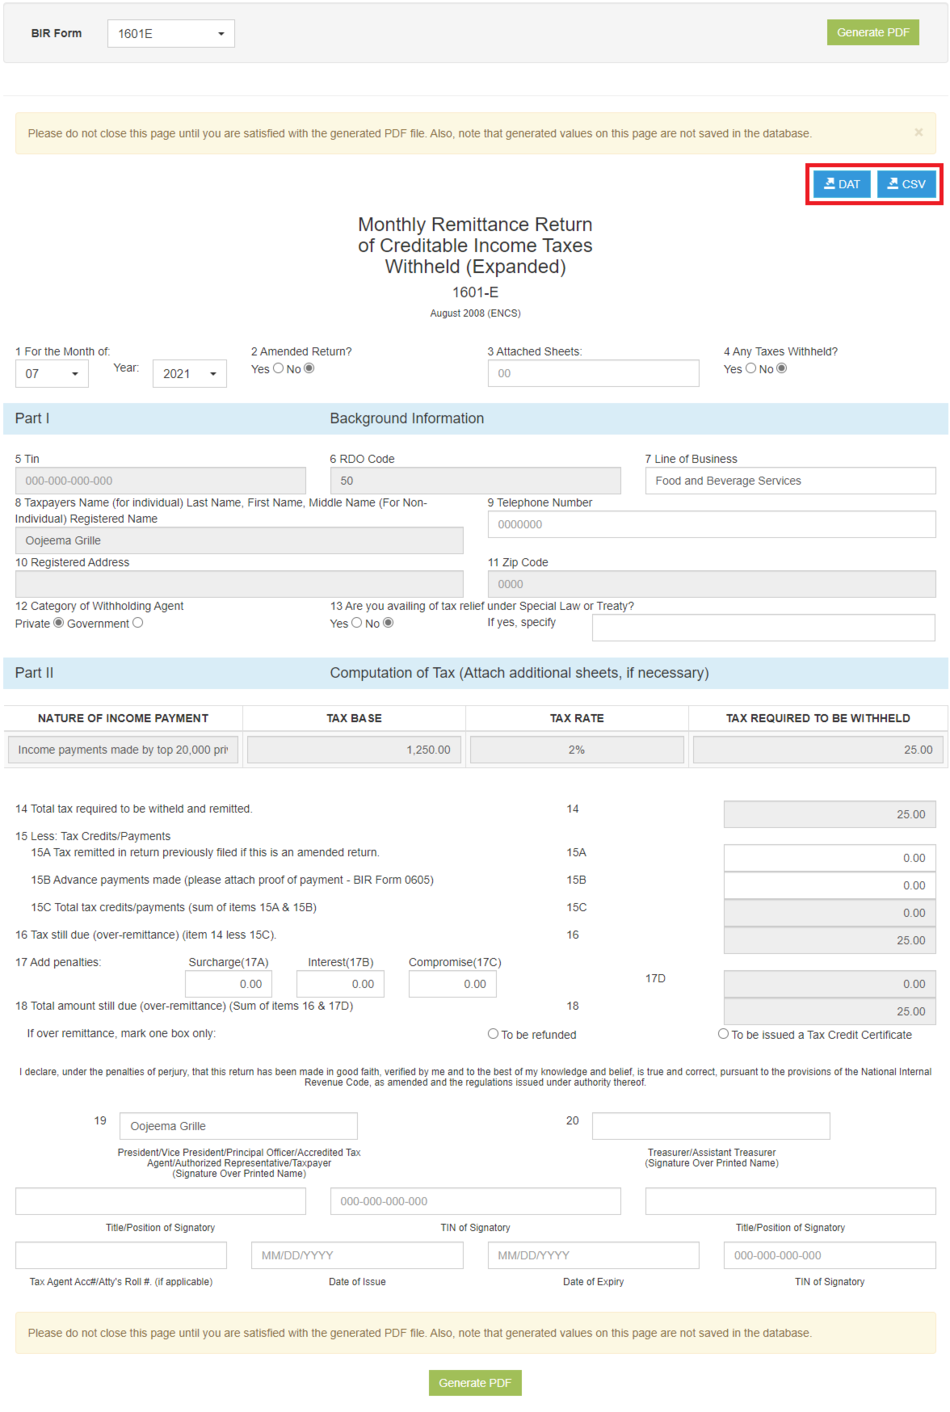 Pro BIR Form 1601E (CSV-DAT) - Step 03.png